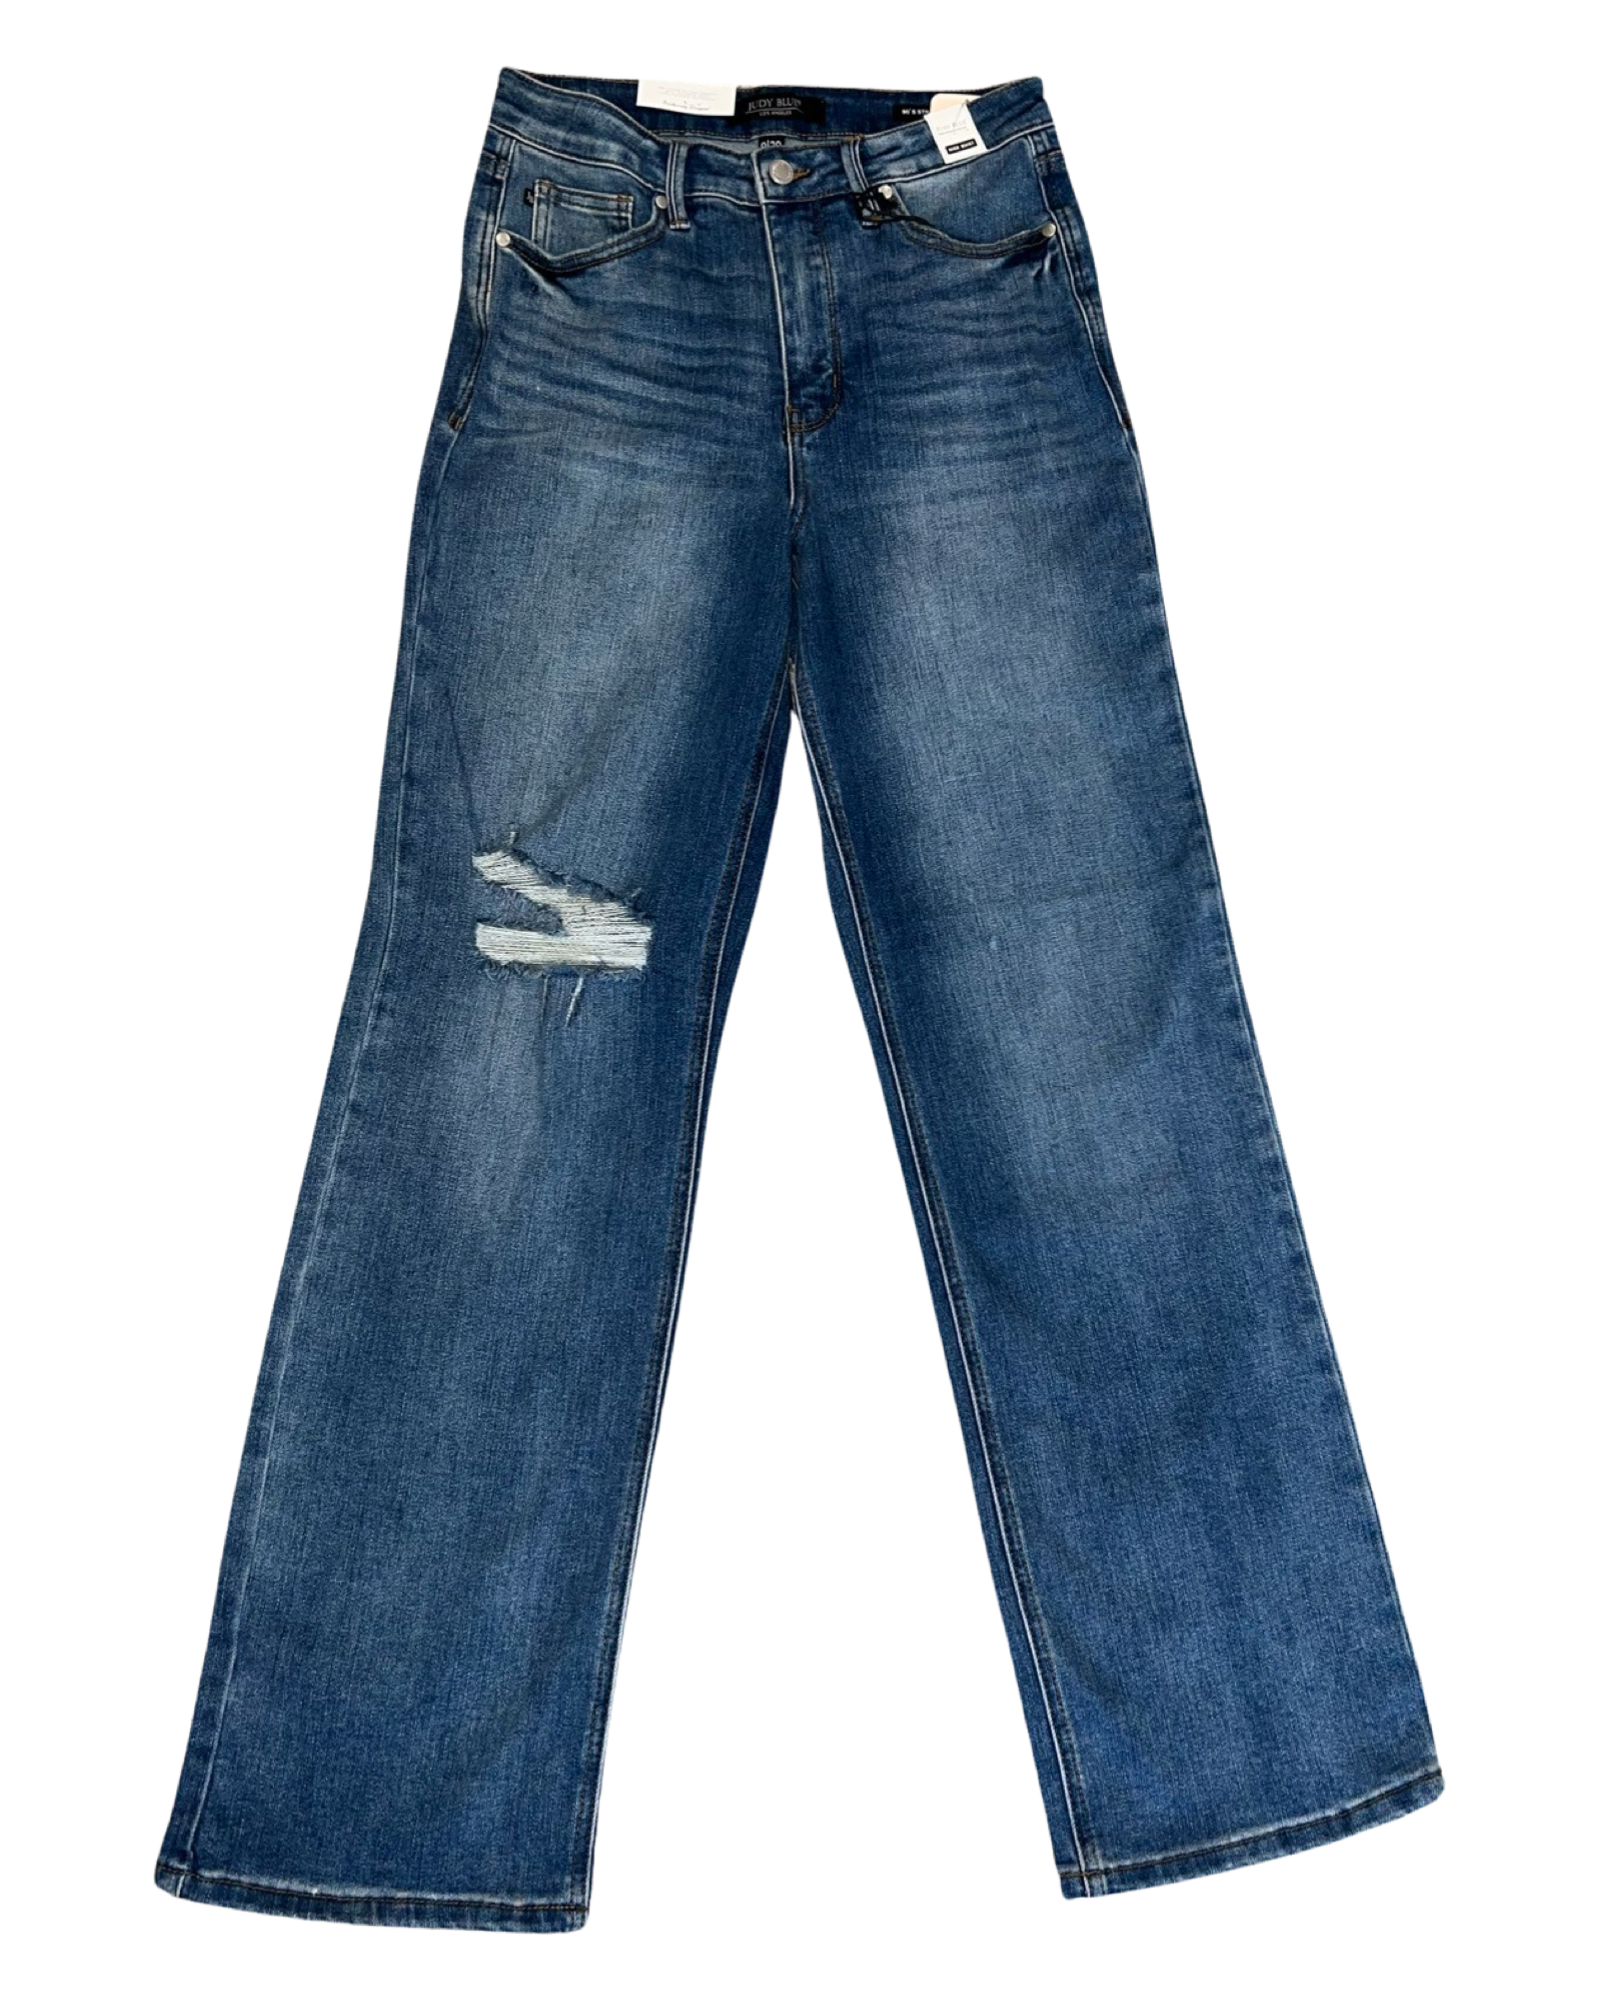 90's Straight Distressed Dark Wash Jeans